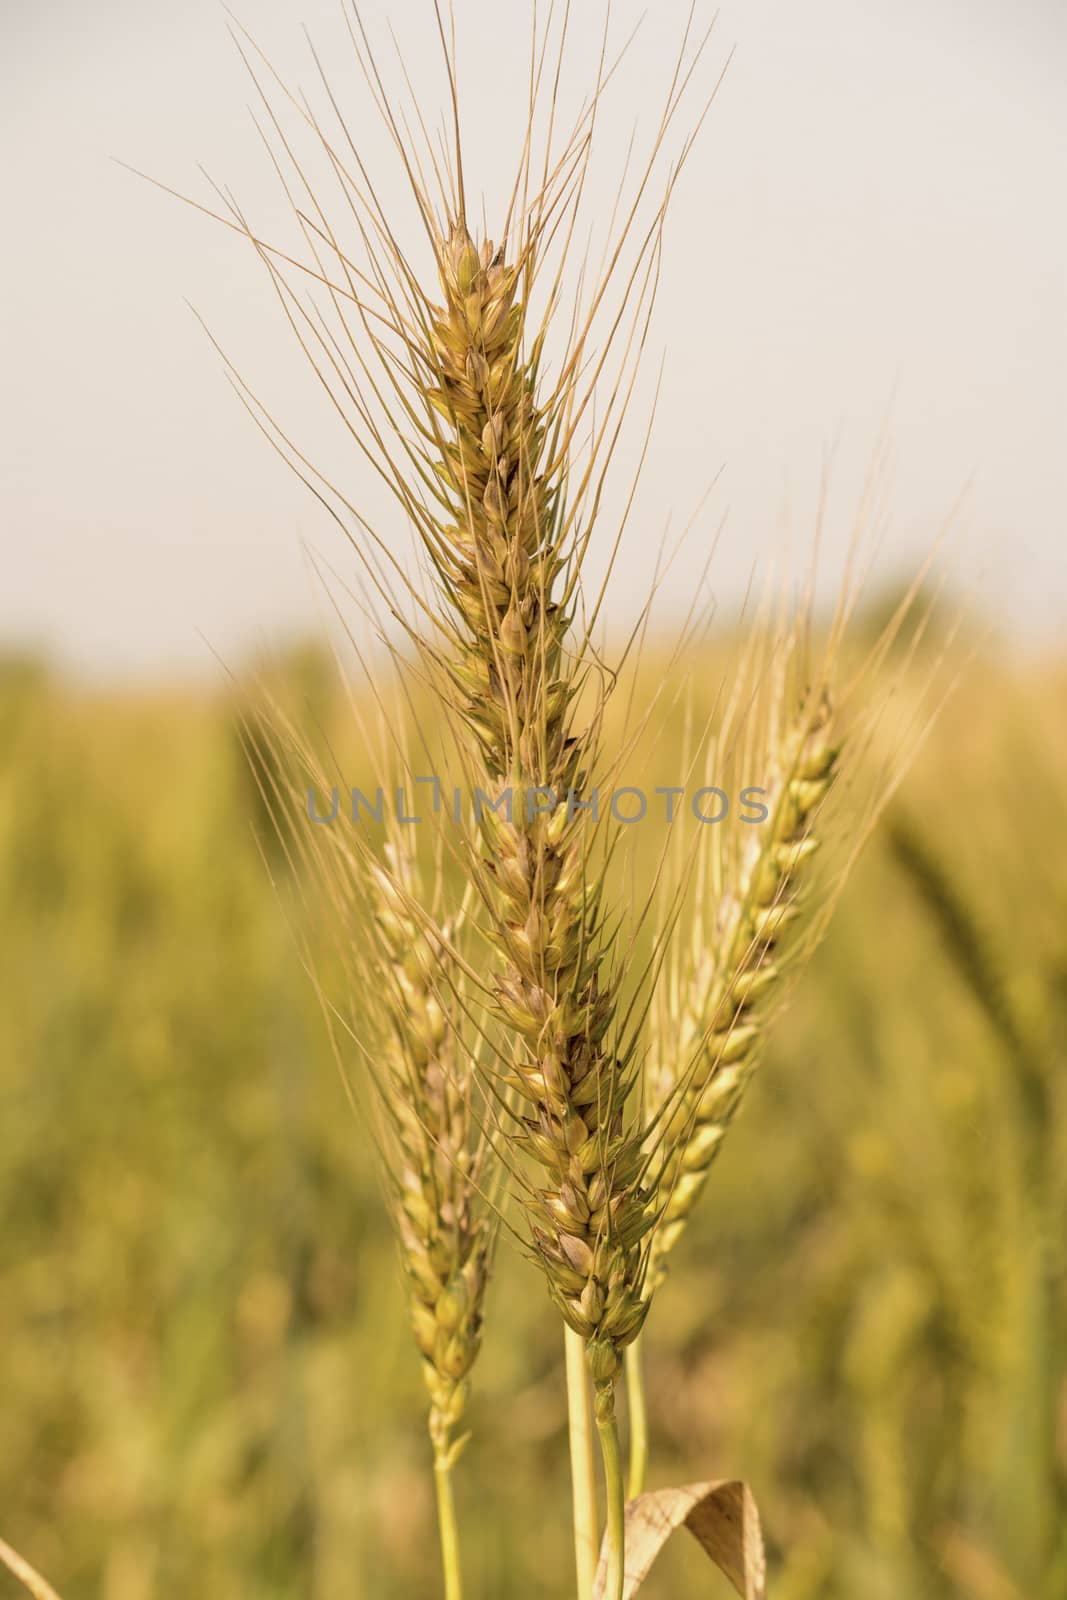 Green wheat field, Green wheat close up, Background of ripening green wheat field